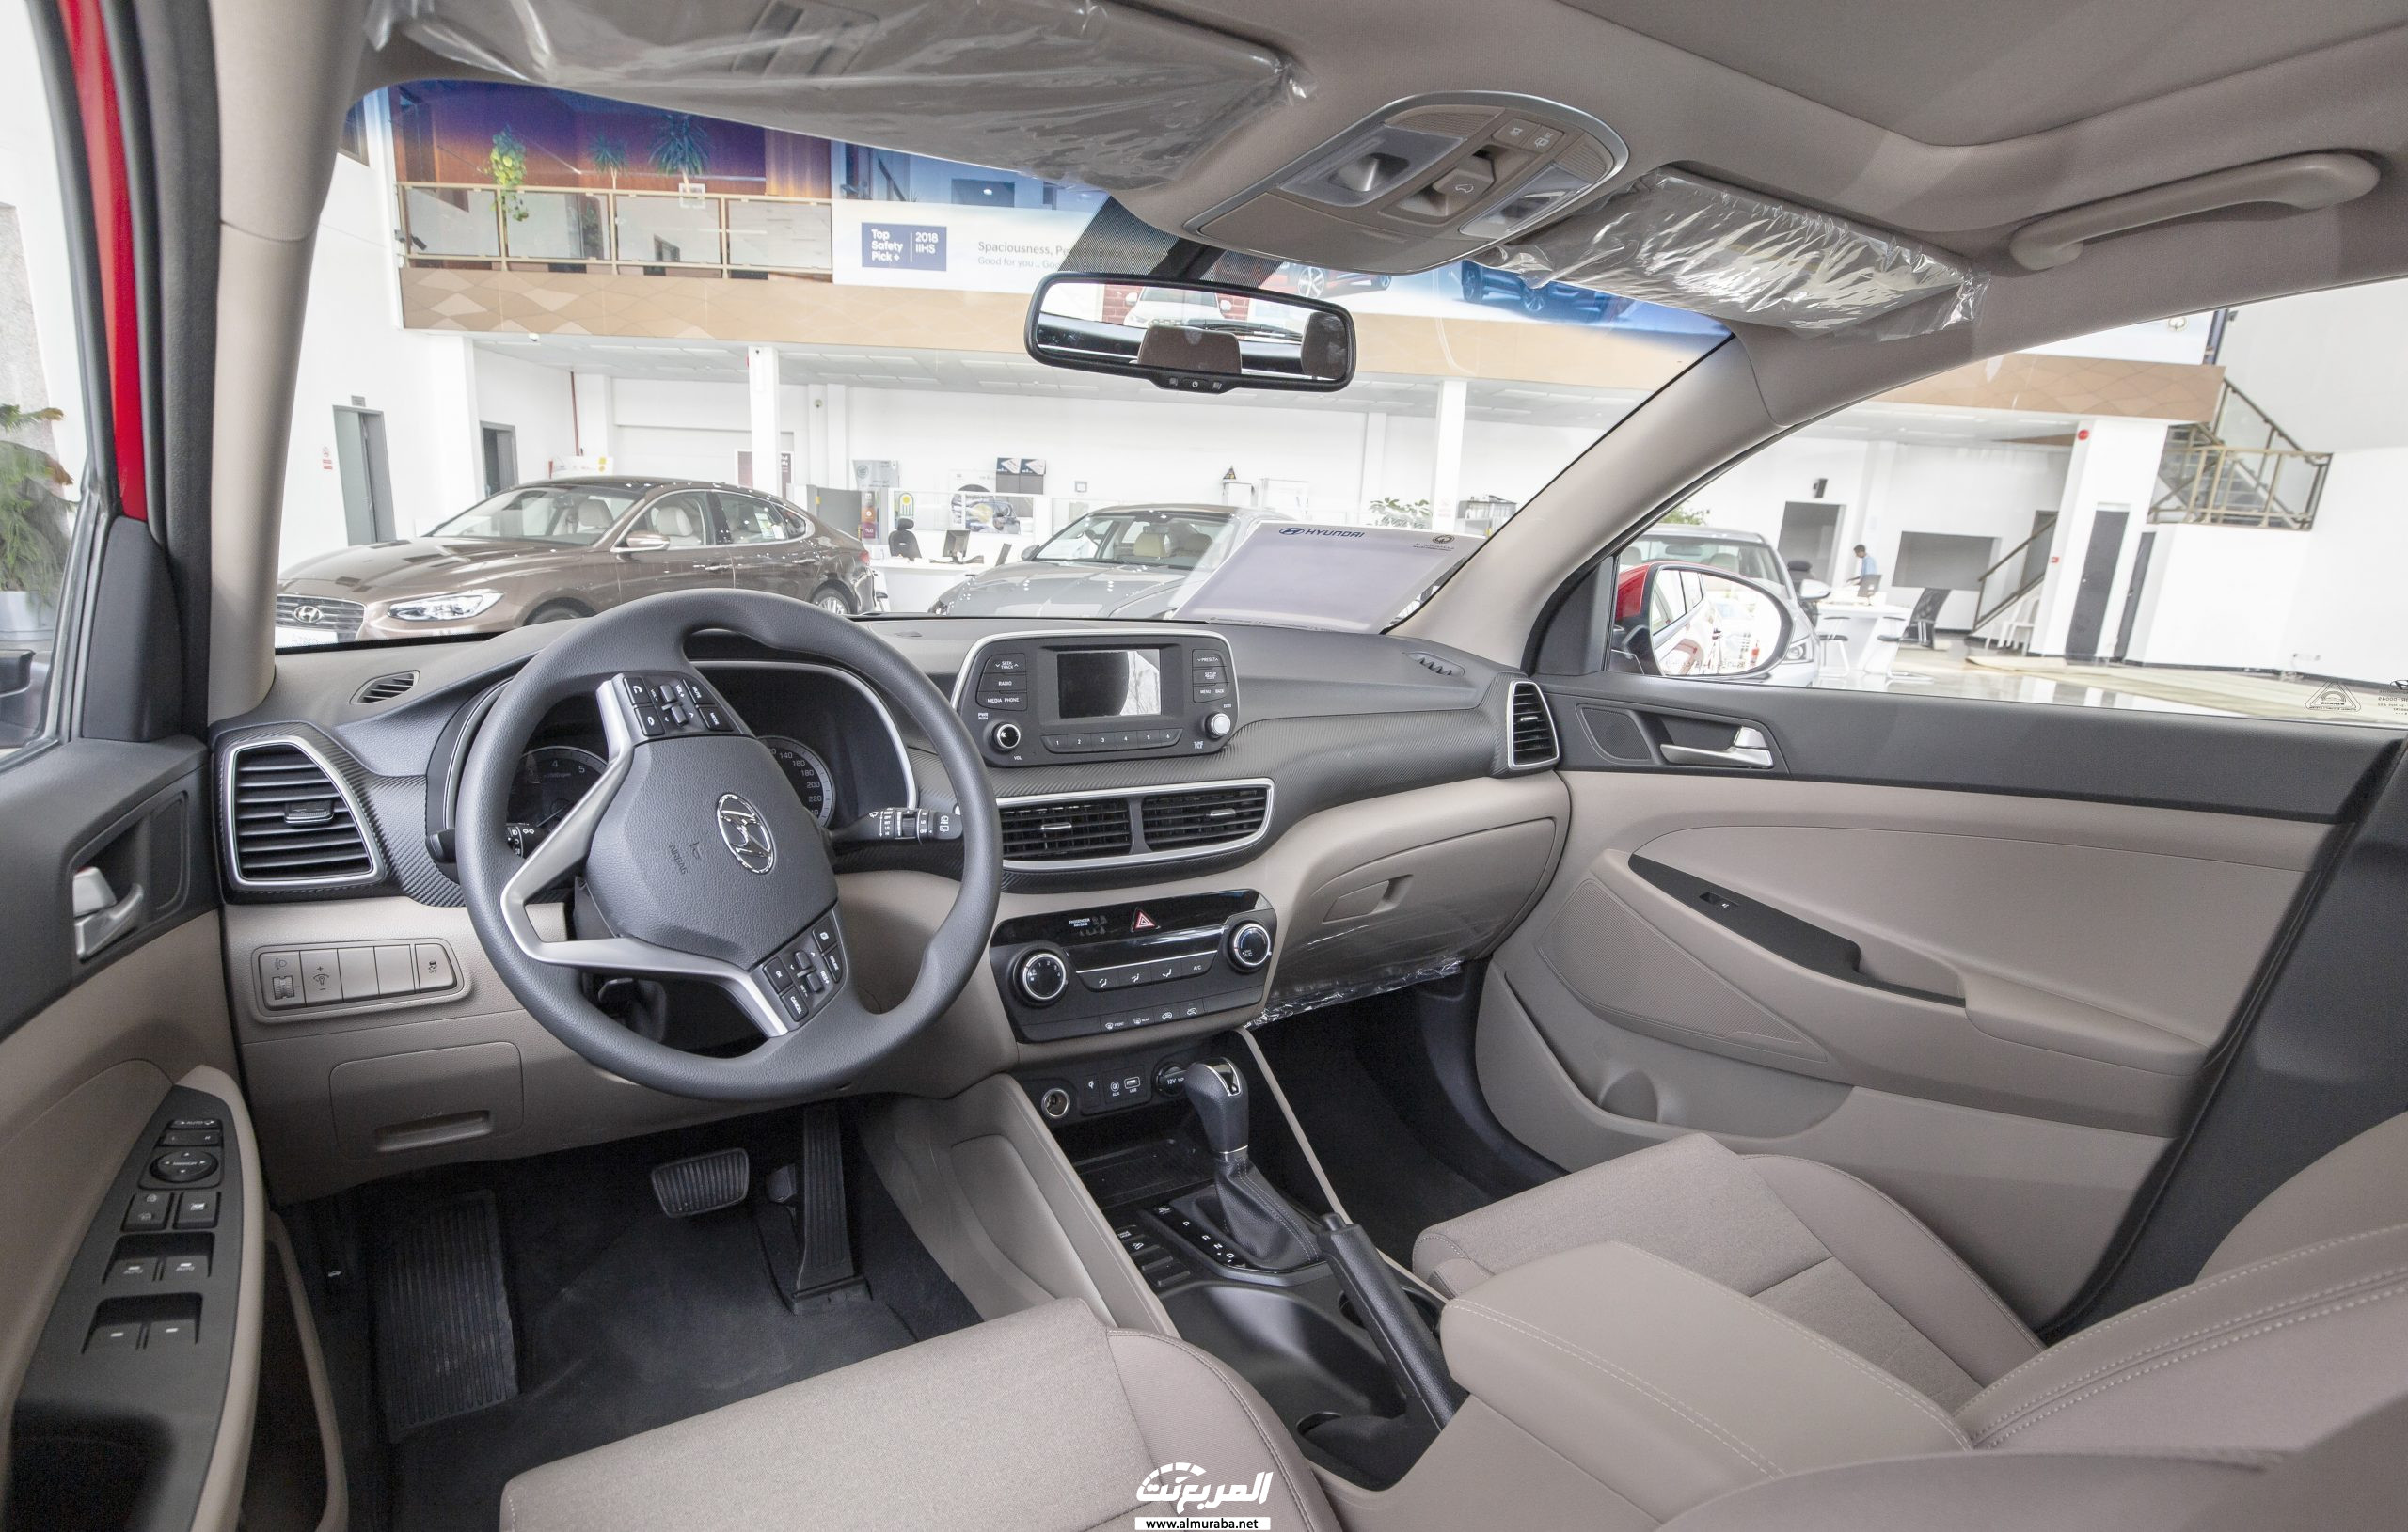 مواصفات هيونداي توسان 2020 في السعودية Hyundai Tucson 79